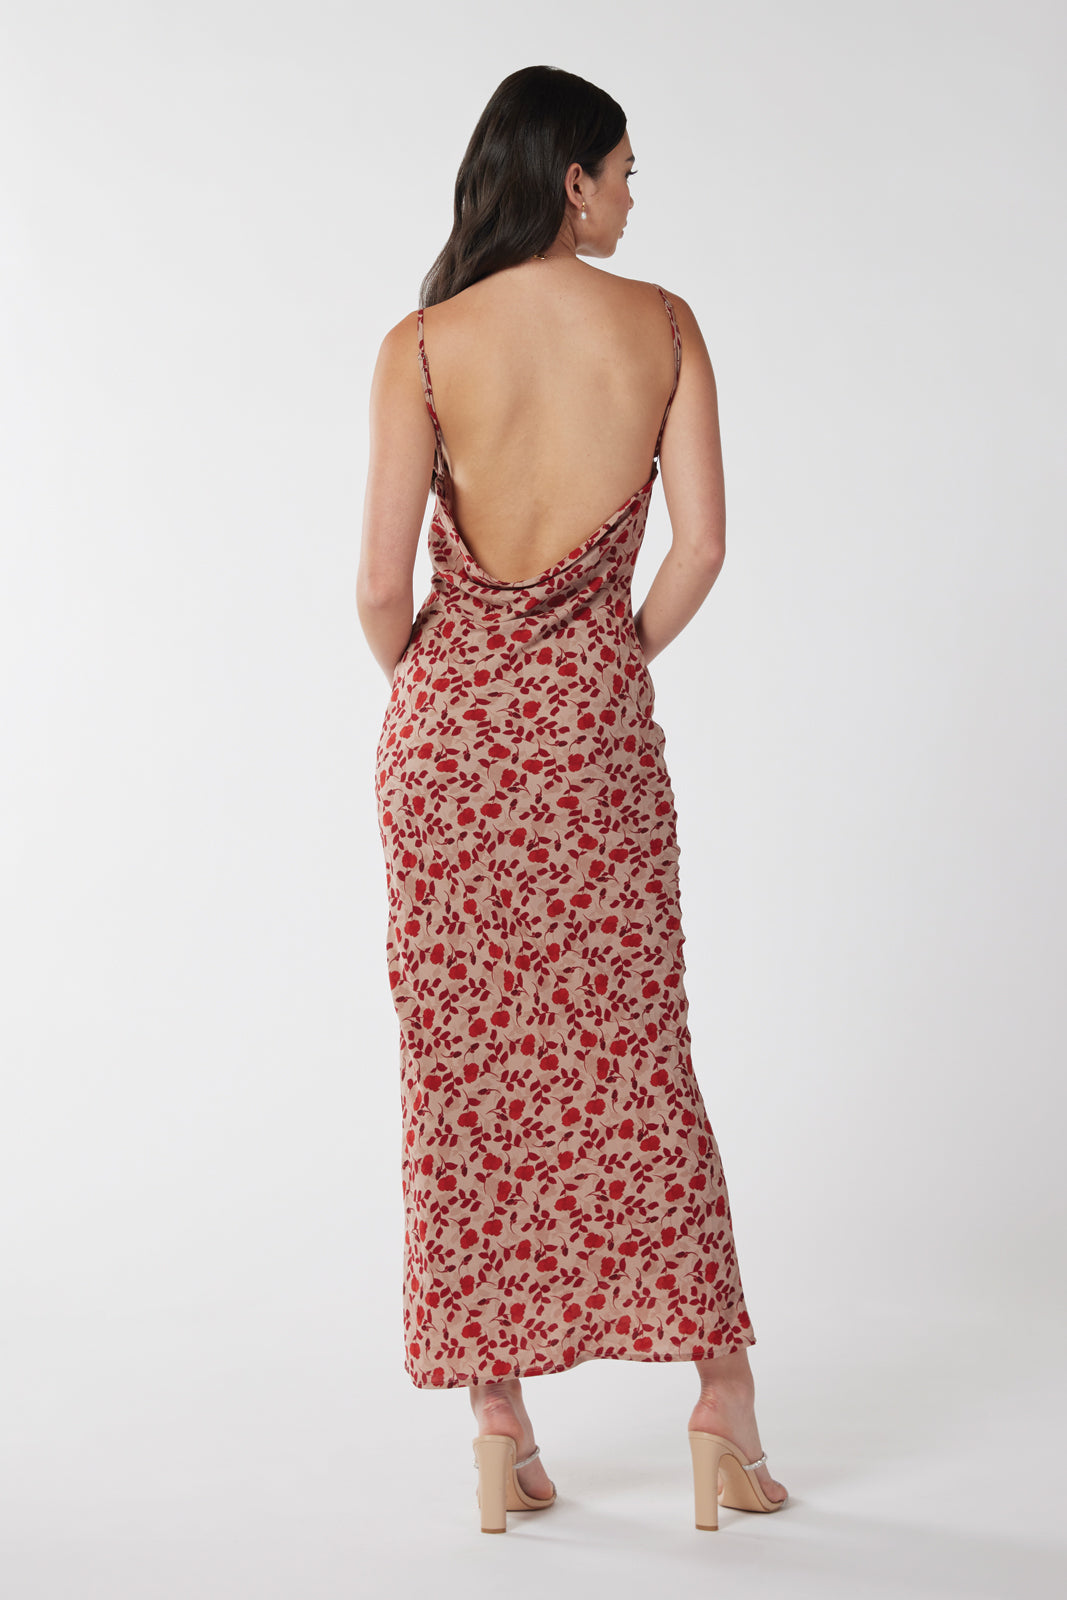 Vespa Rossa Floral Dress